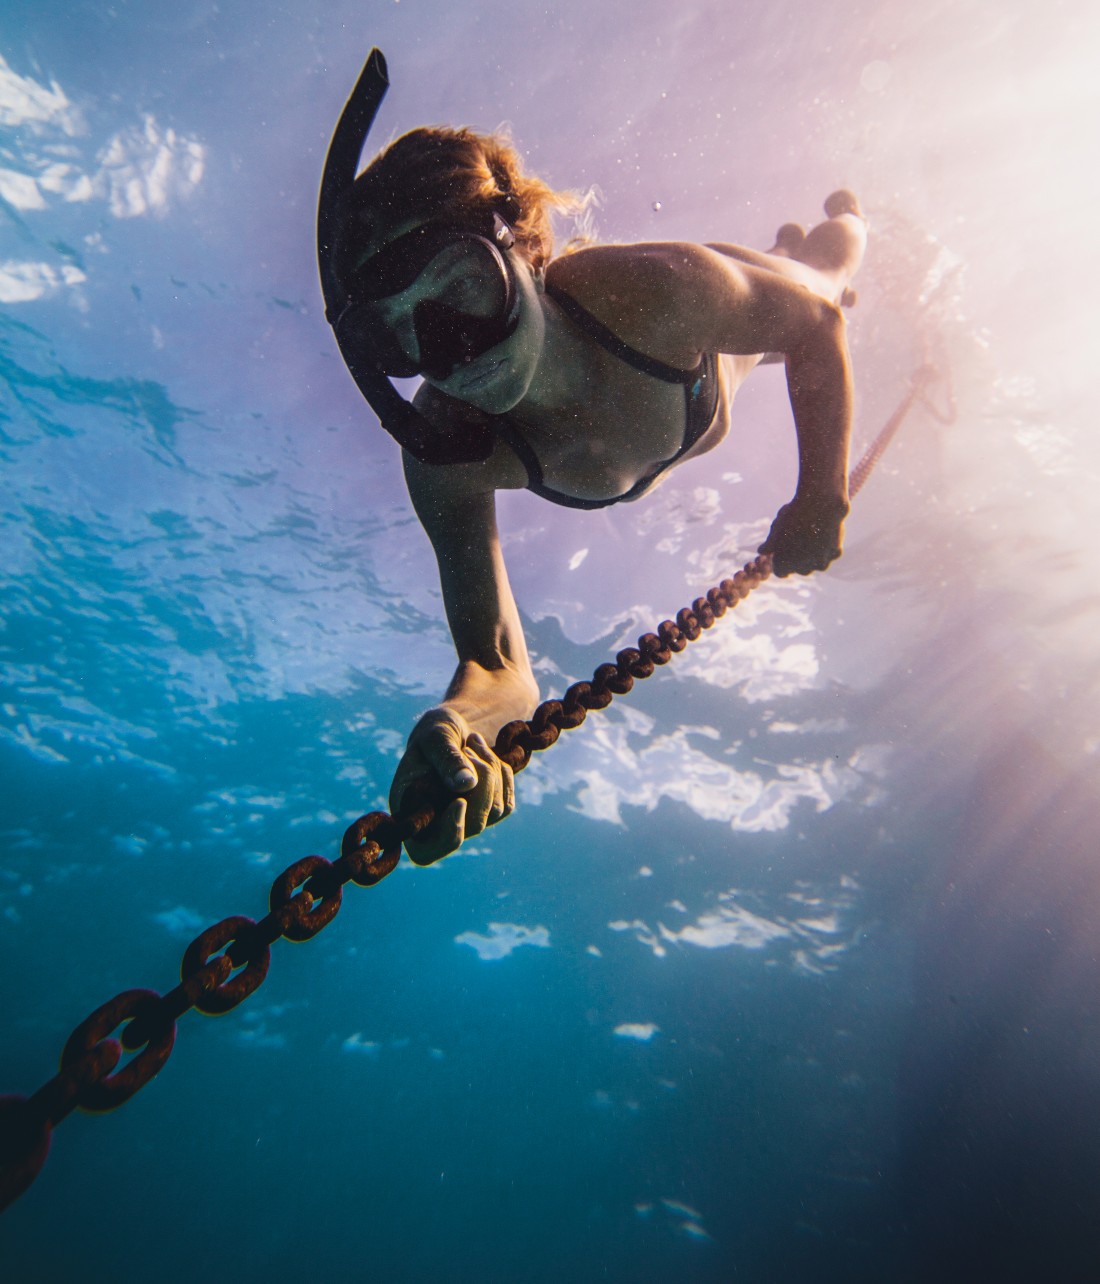 Liz snorkeling on chain